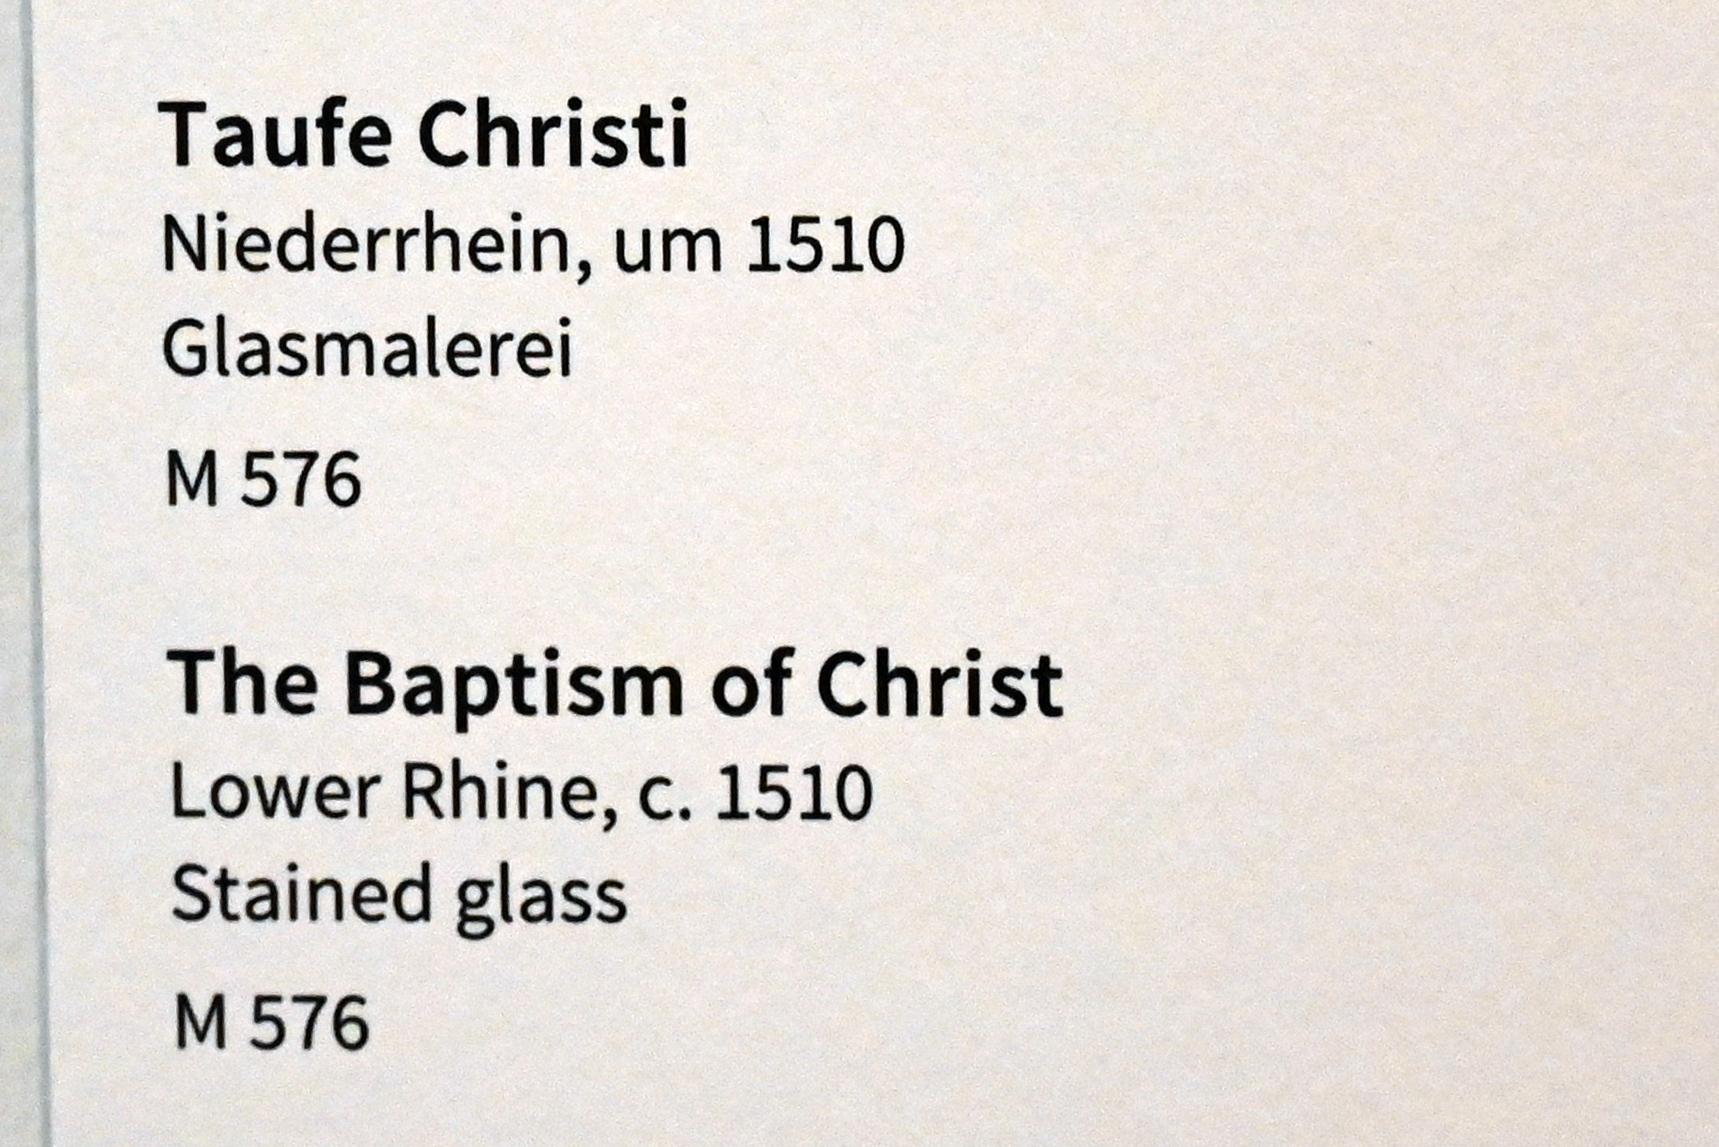 Taufe Christi, Köln, Museum Schnütgen, Saal 2, um 1510, Bild 2/2